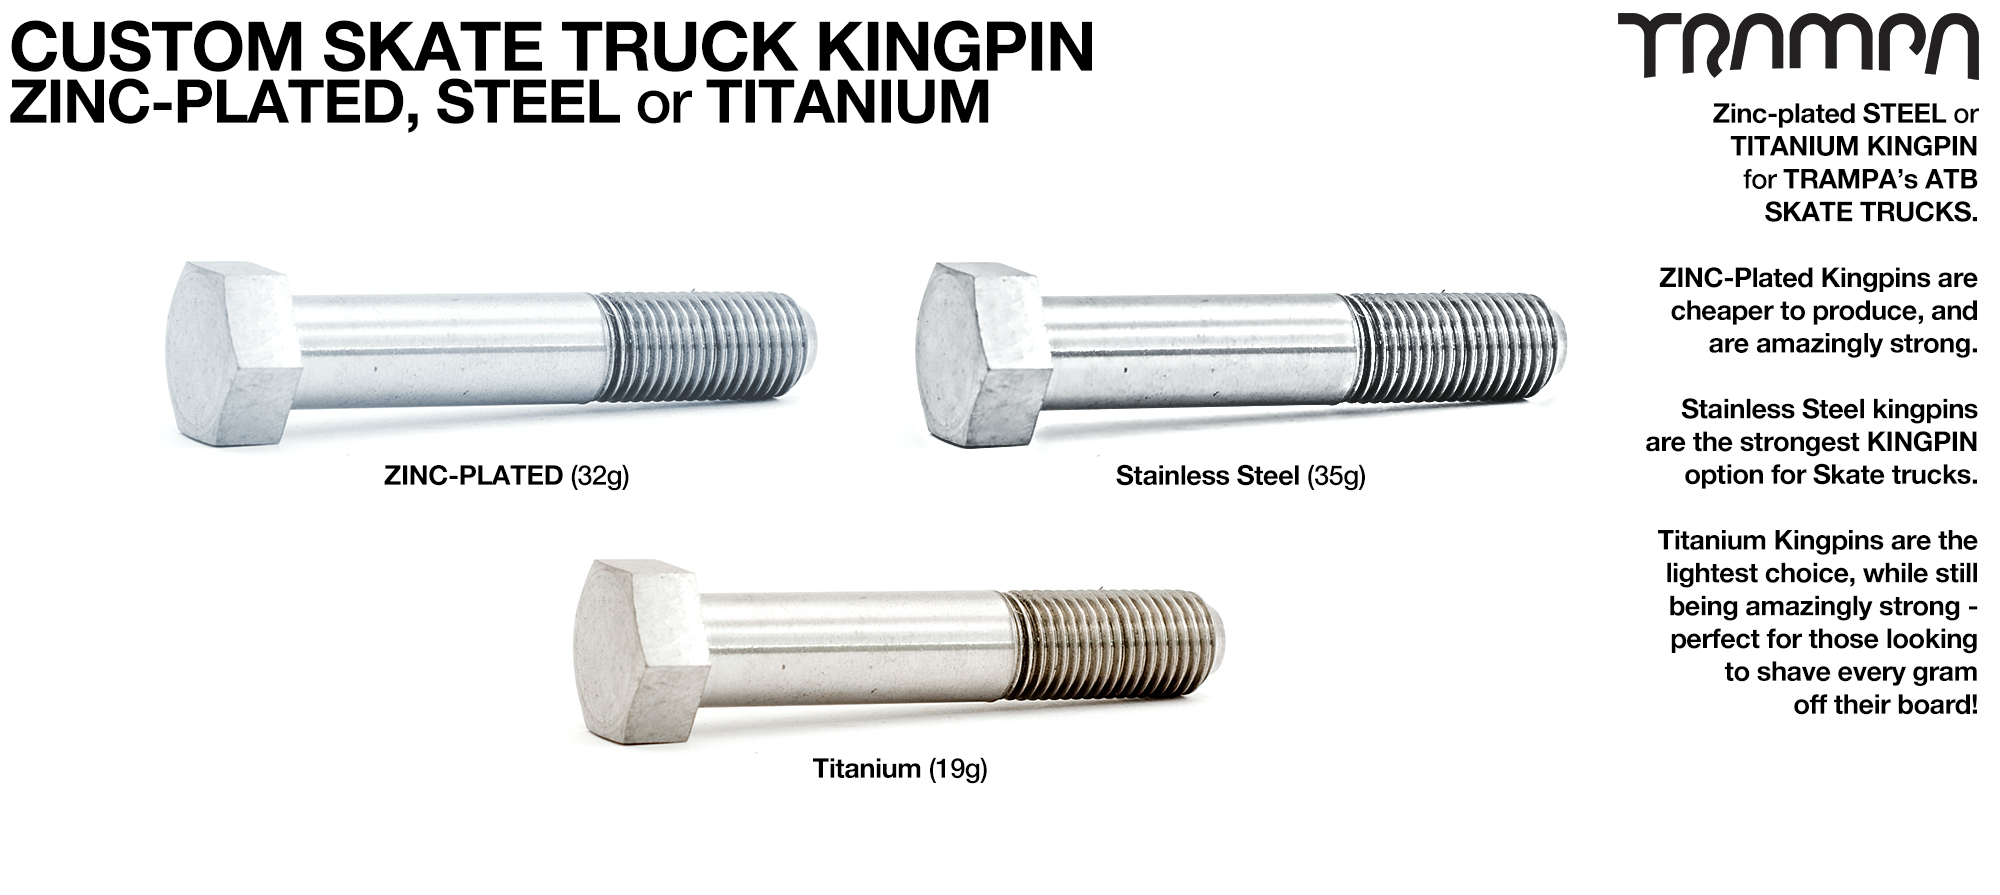 Skate Truck Kingpin Custom